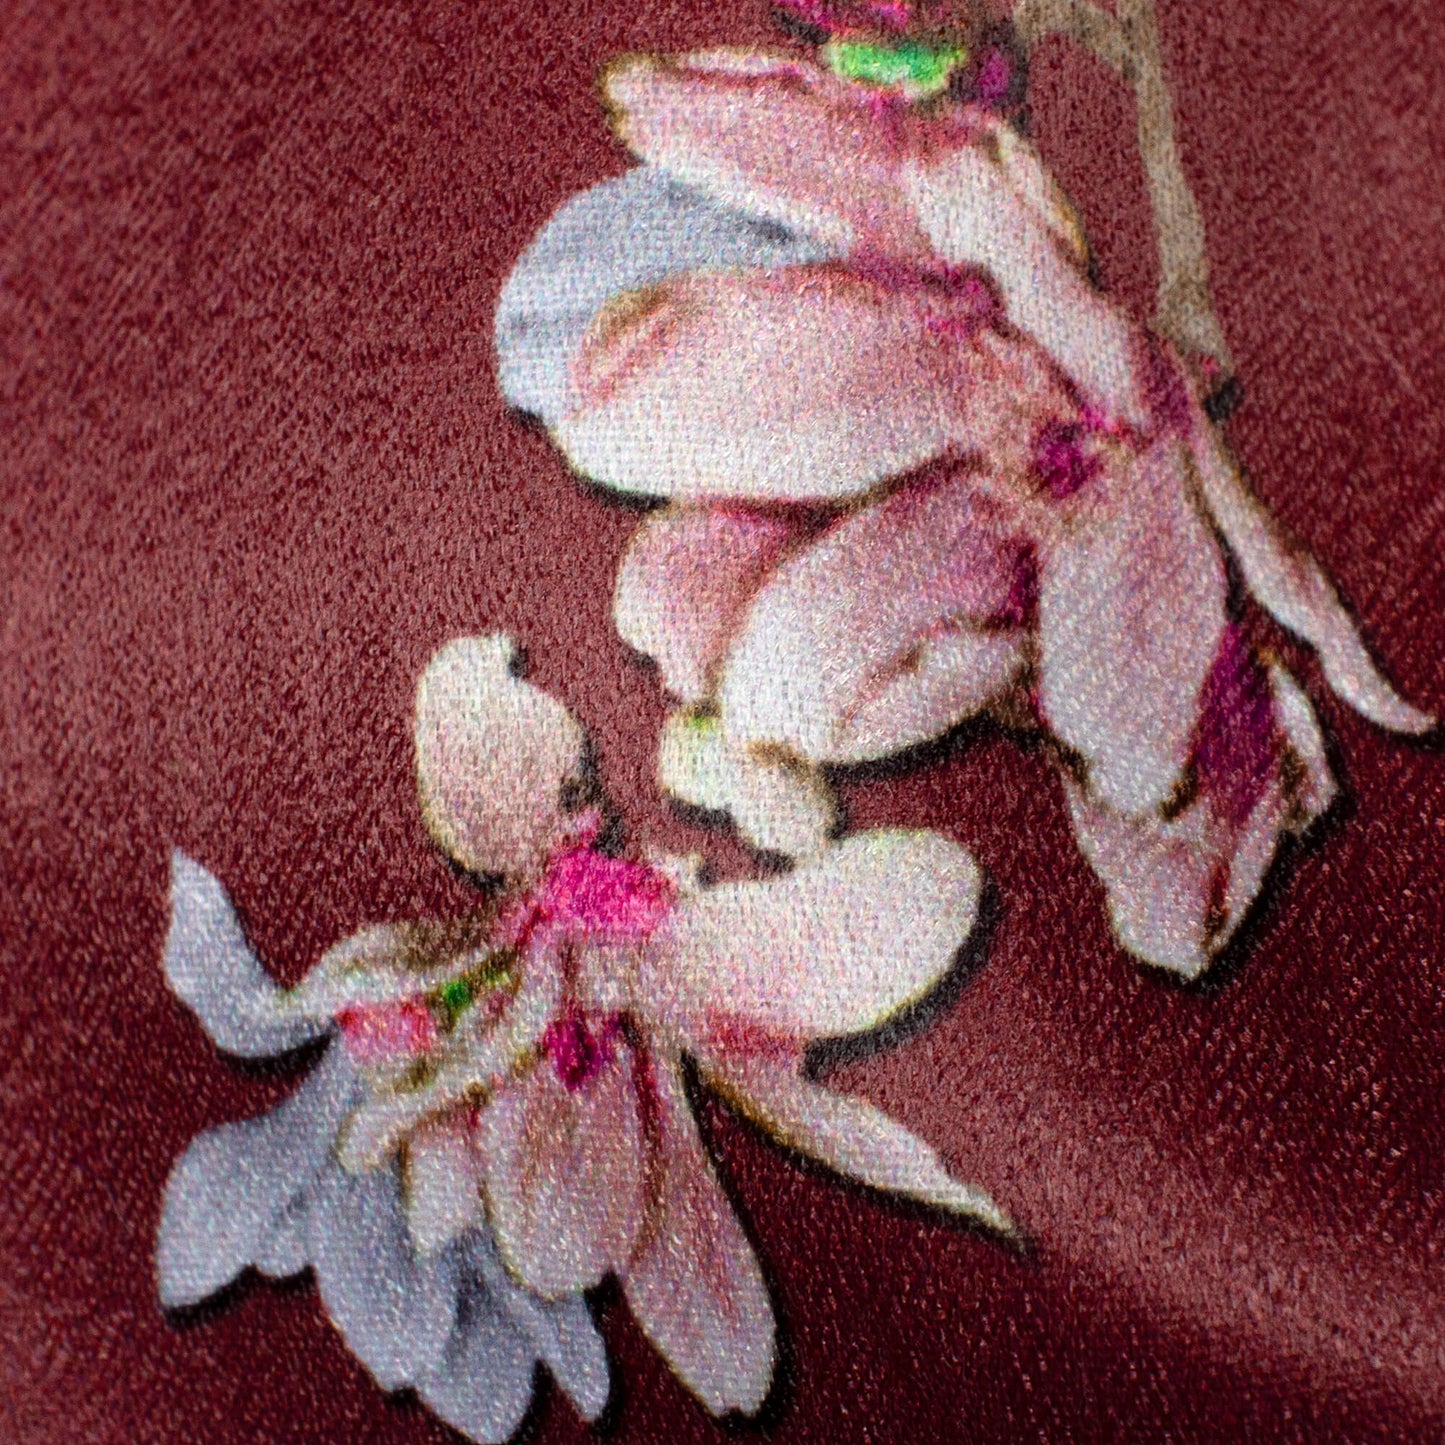 Mahogany Brown And Pink Floral Pattern Digital Print Lush Satin Fabric